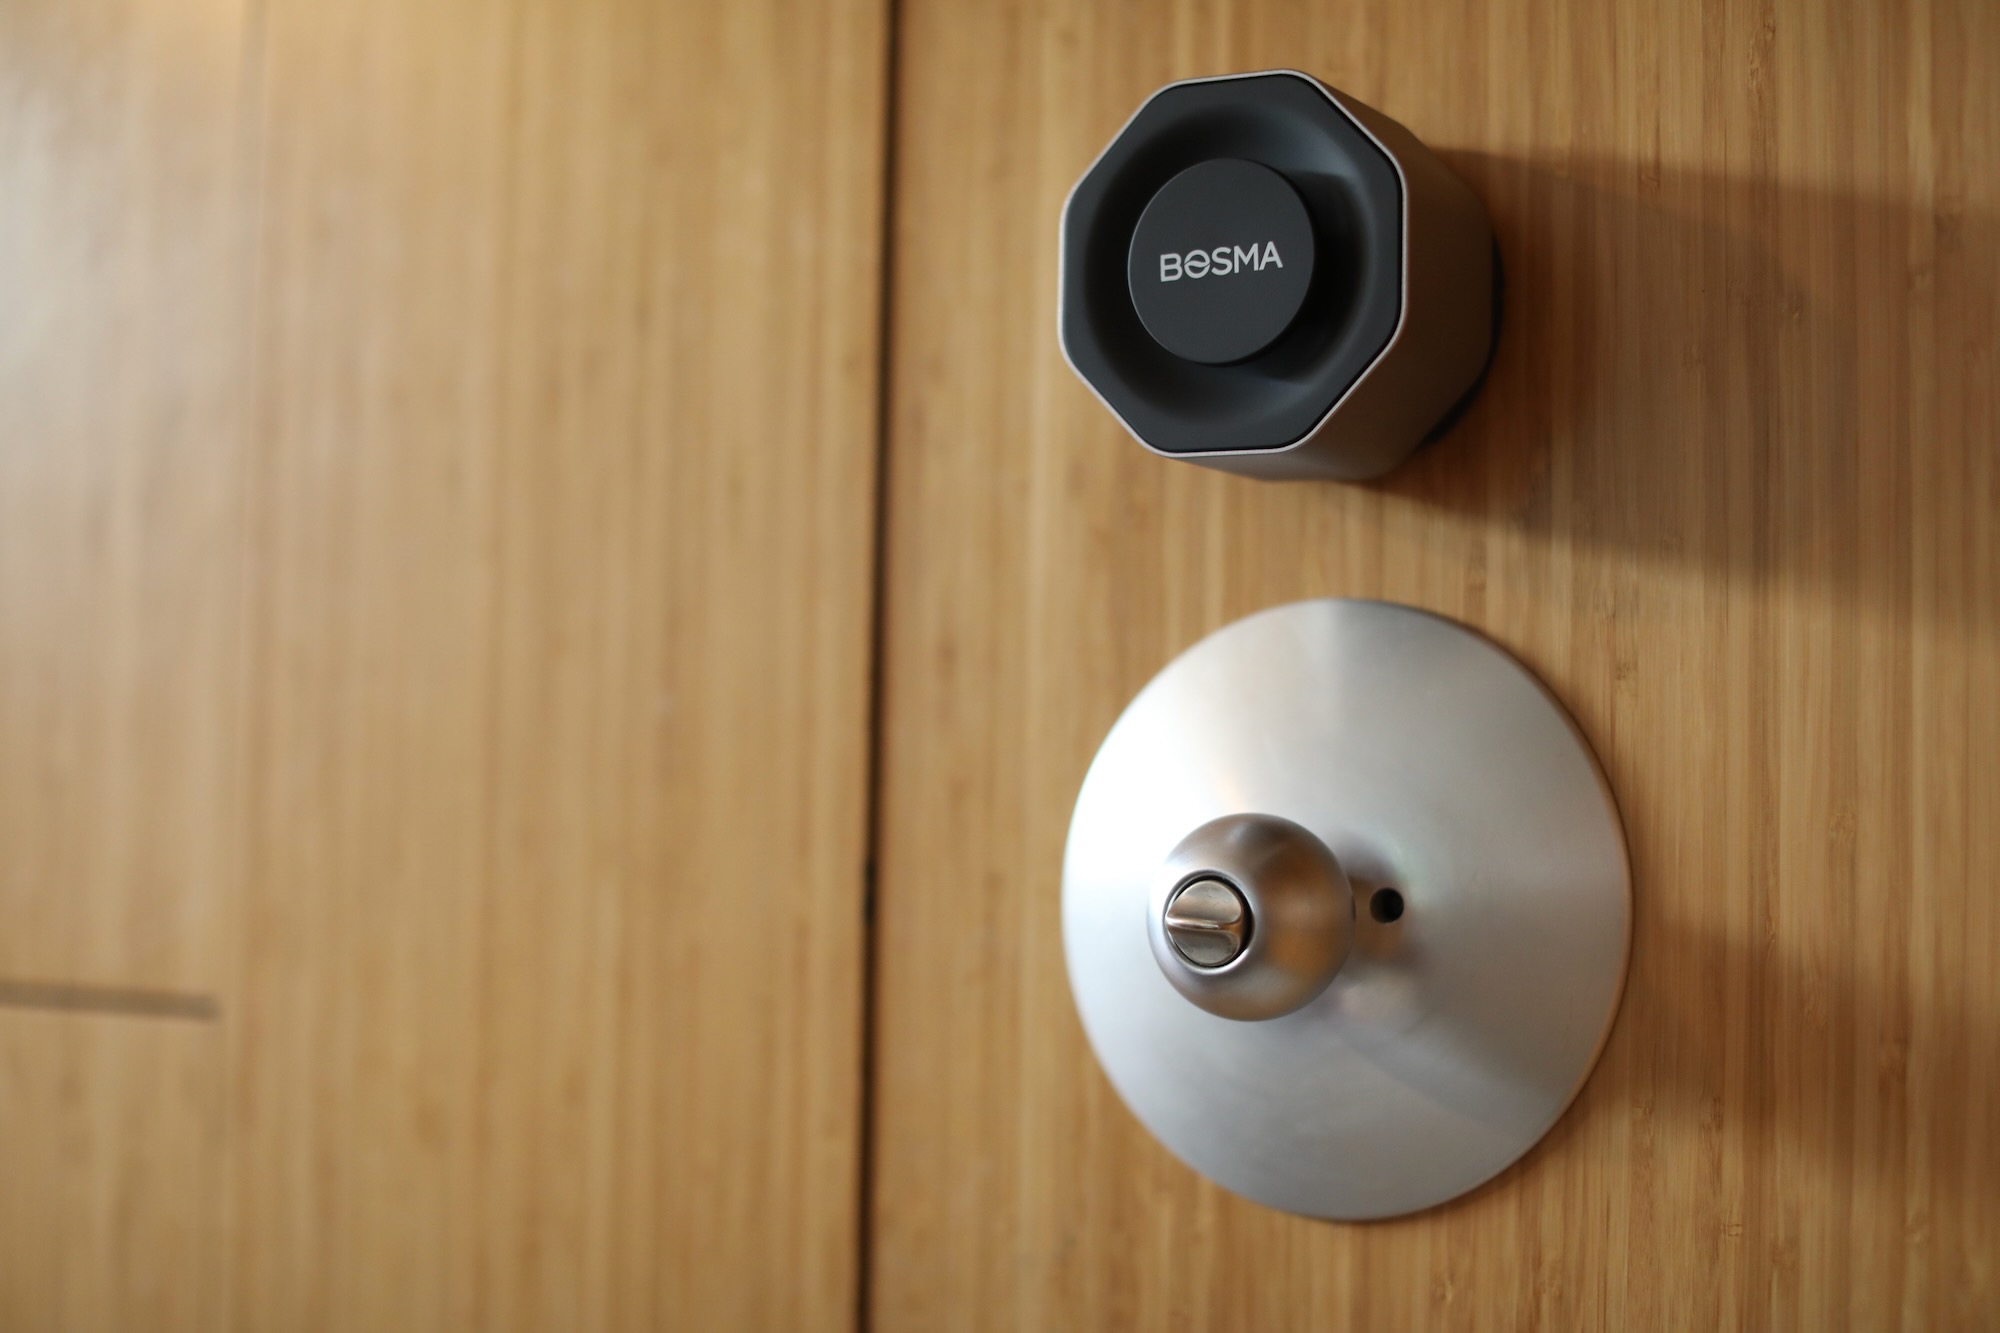 Bosma Aegis Smart Door Lock -- Best retrofit smart lock, runner-up